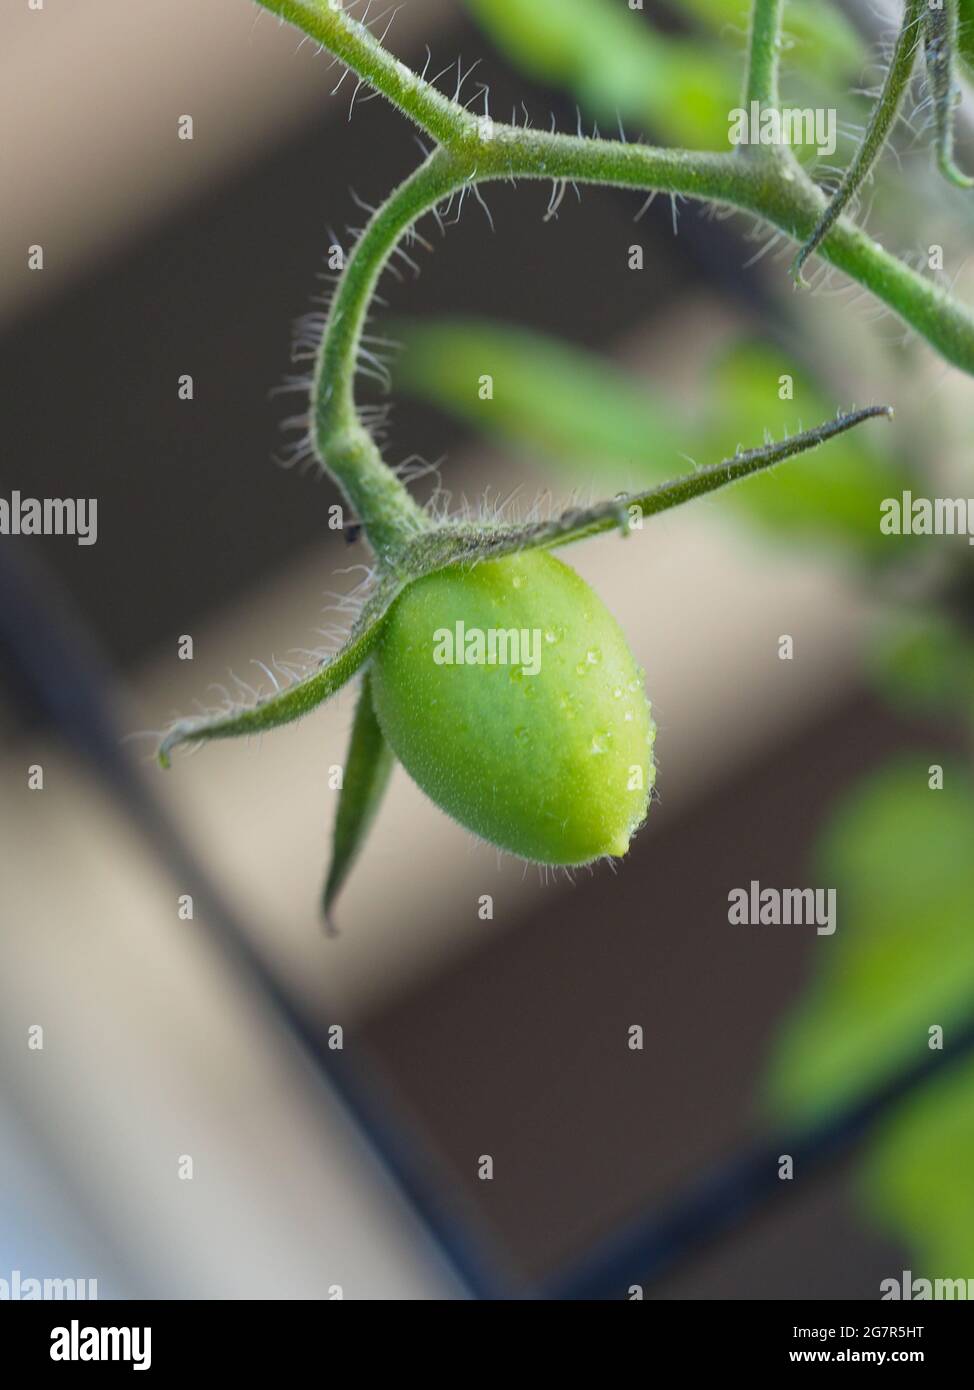 A still green tomato and hairy calyx growing, Australian kitchen garden Stock Photo